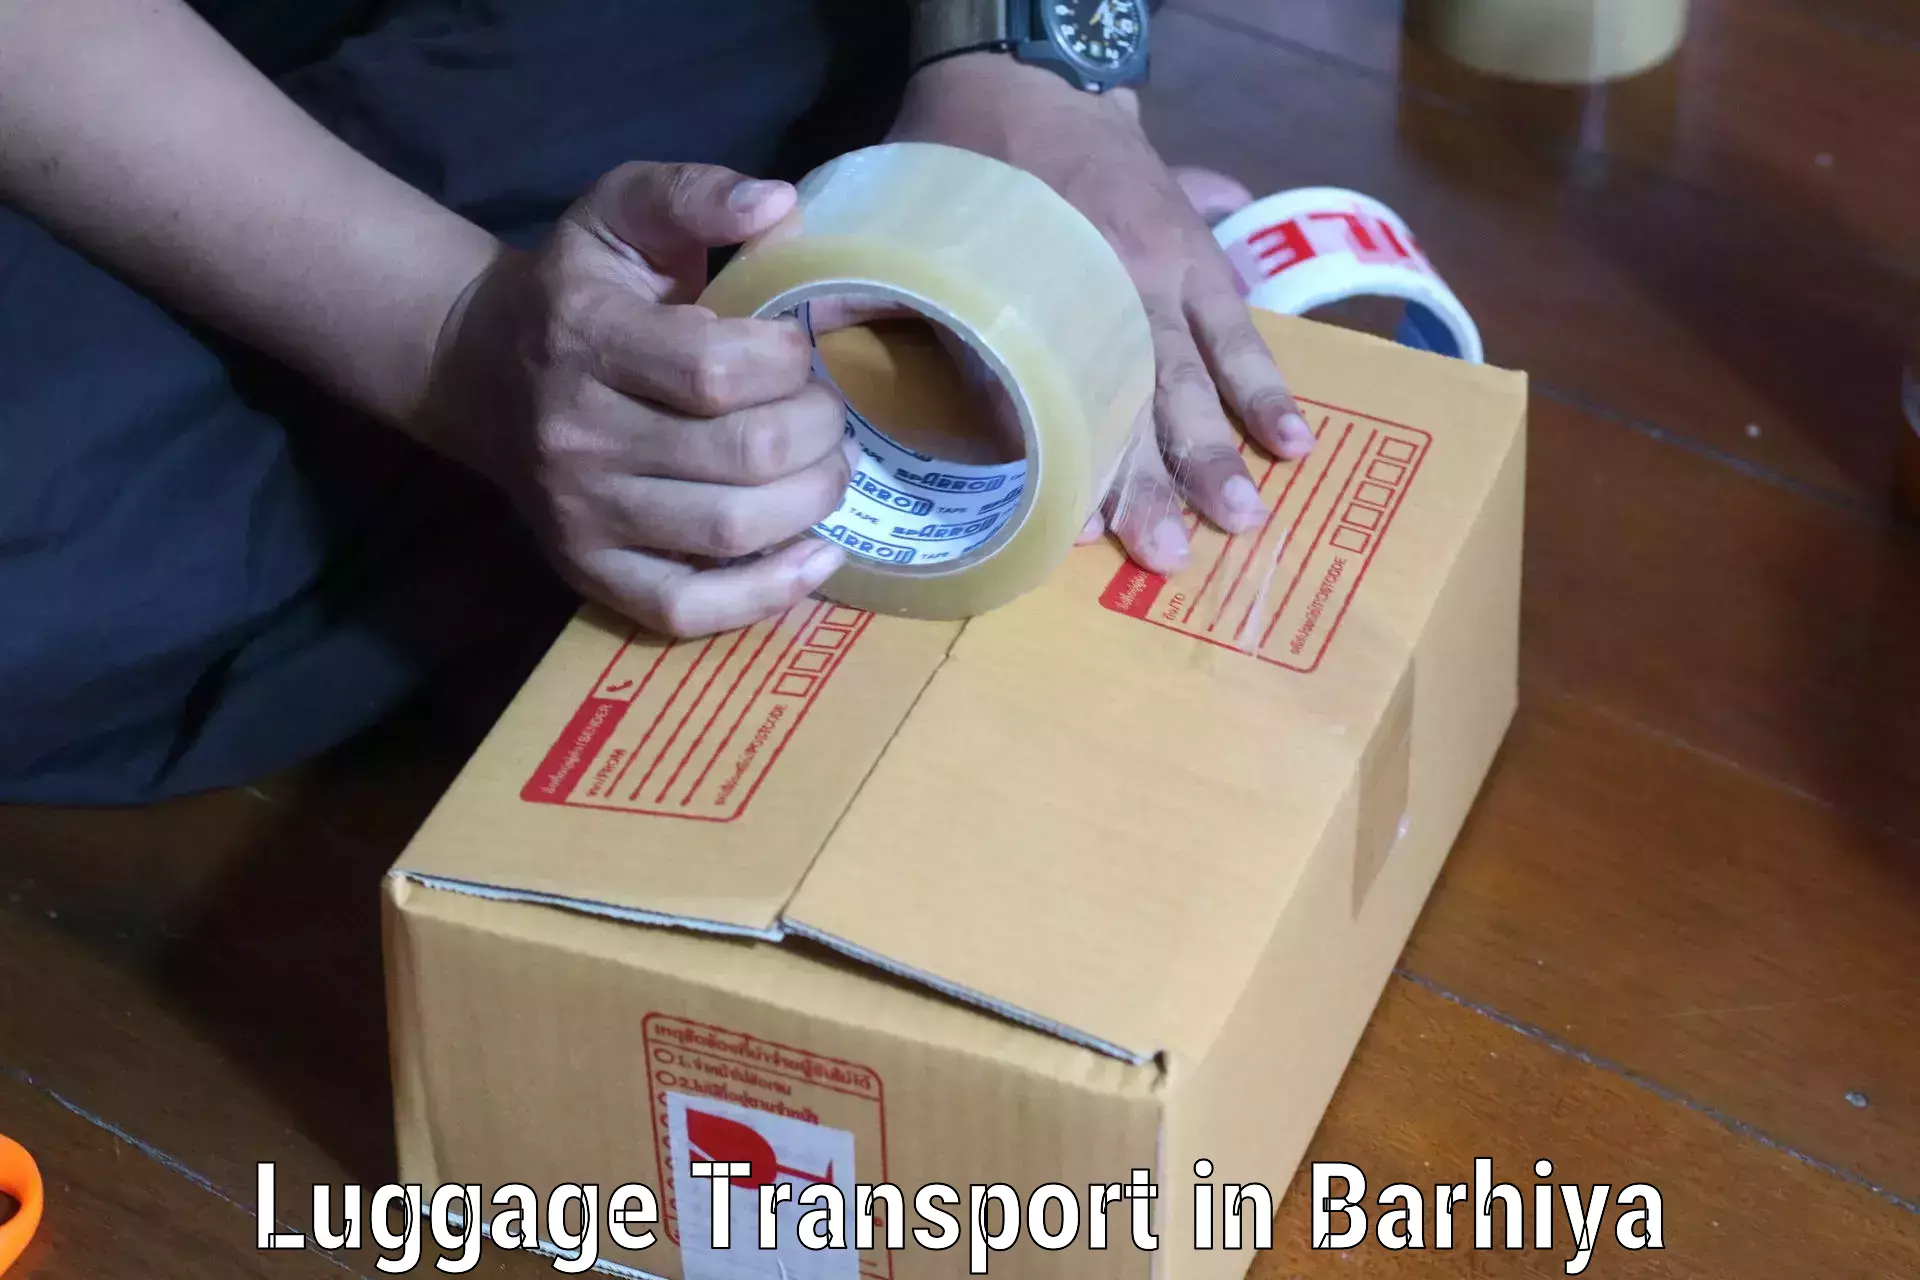 Baggage transport services in Barhiya